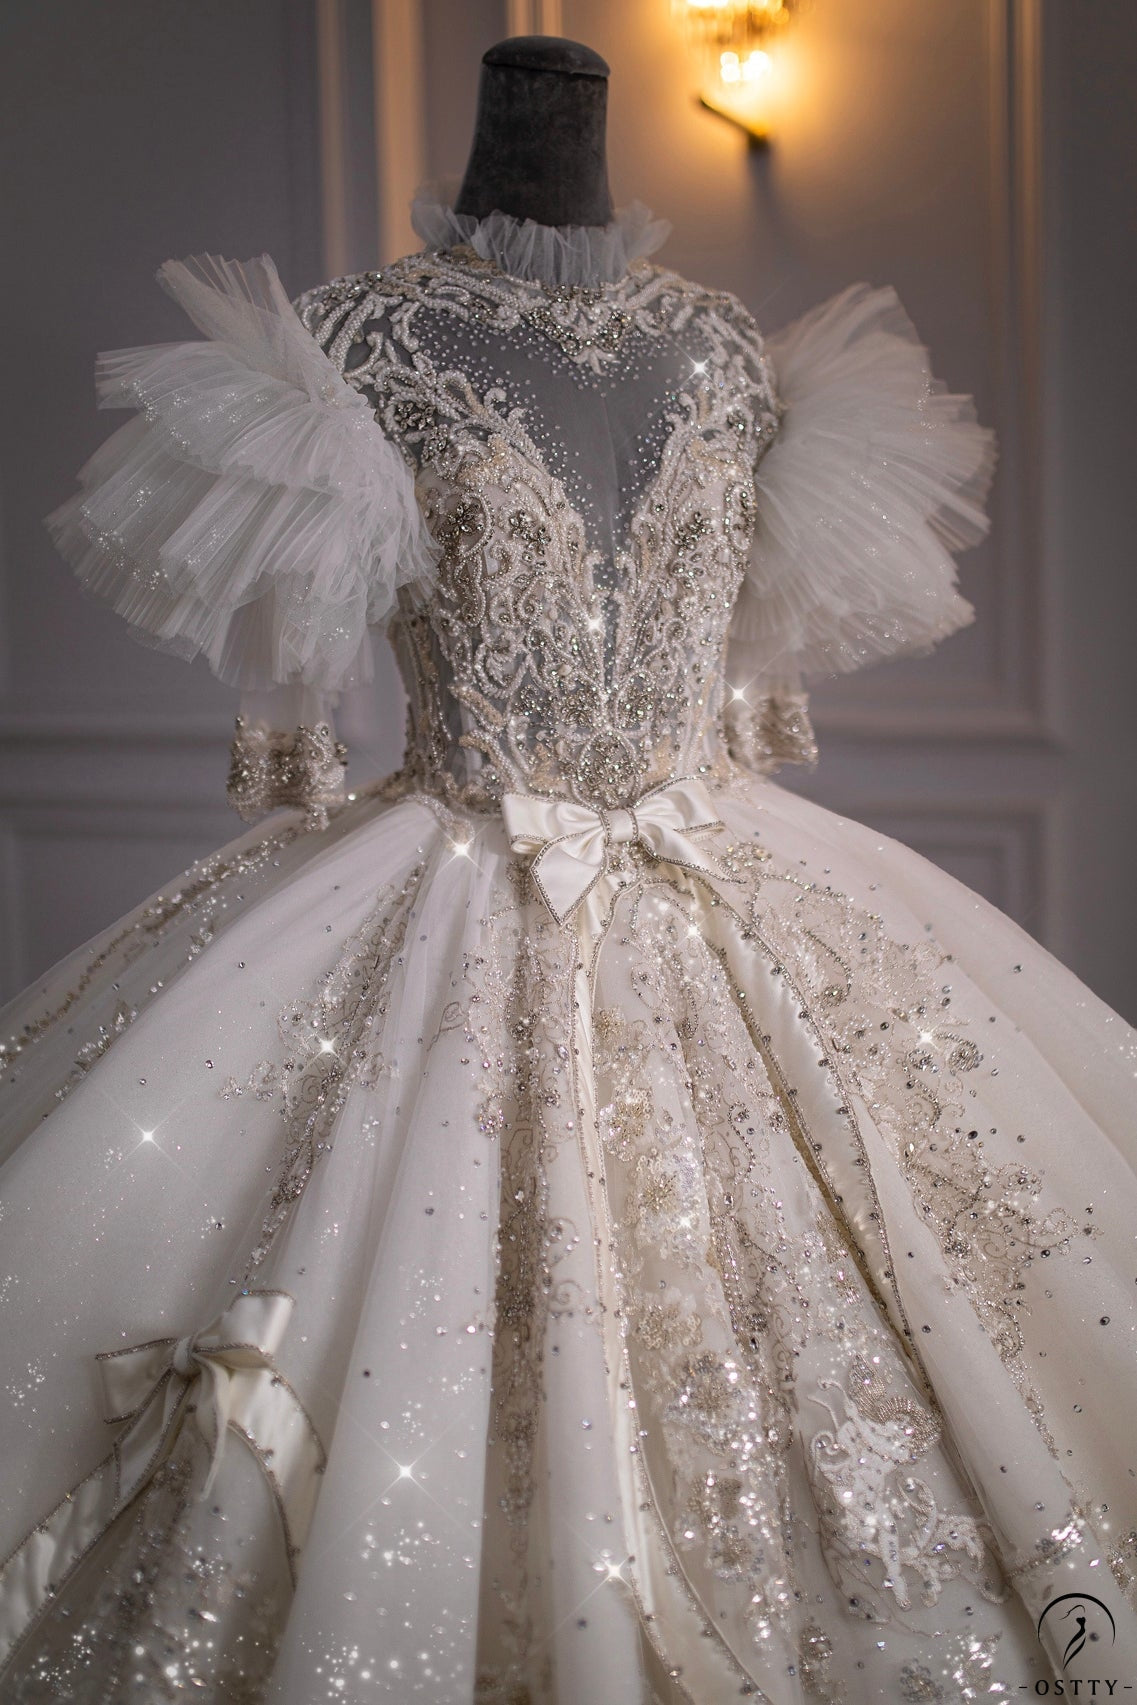 Short Sleeves Wedding Dresses & Bridal Gowns - Princessly